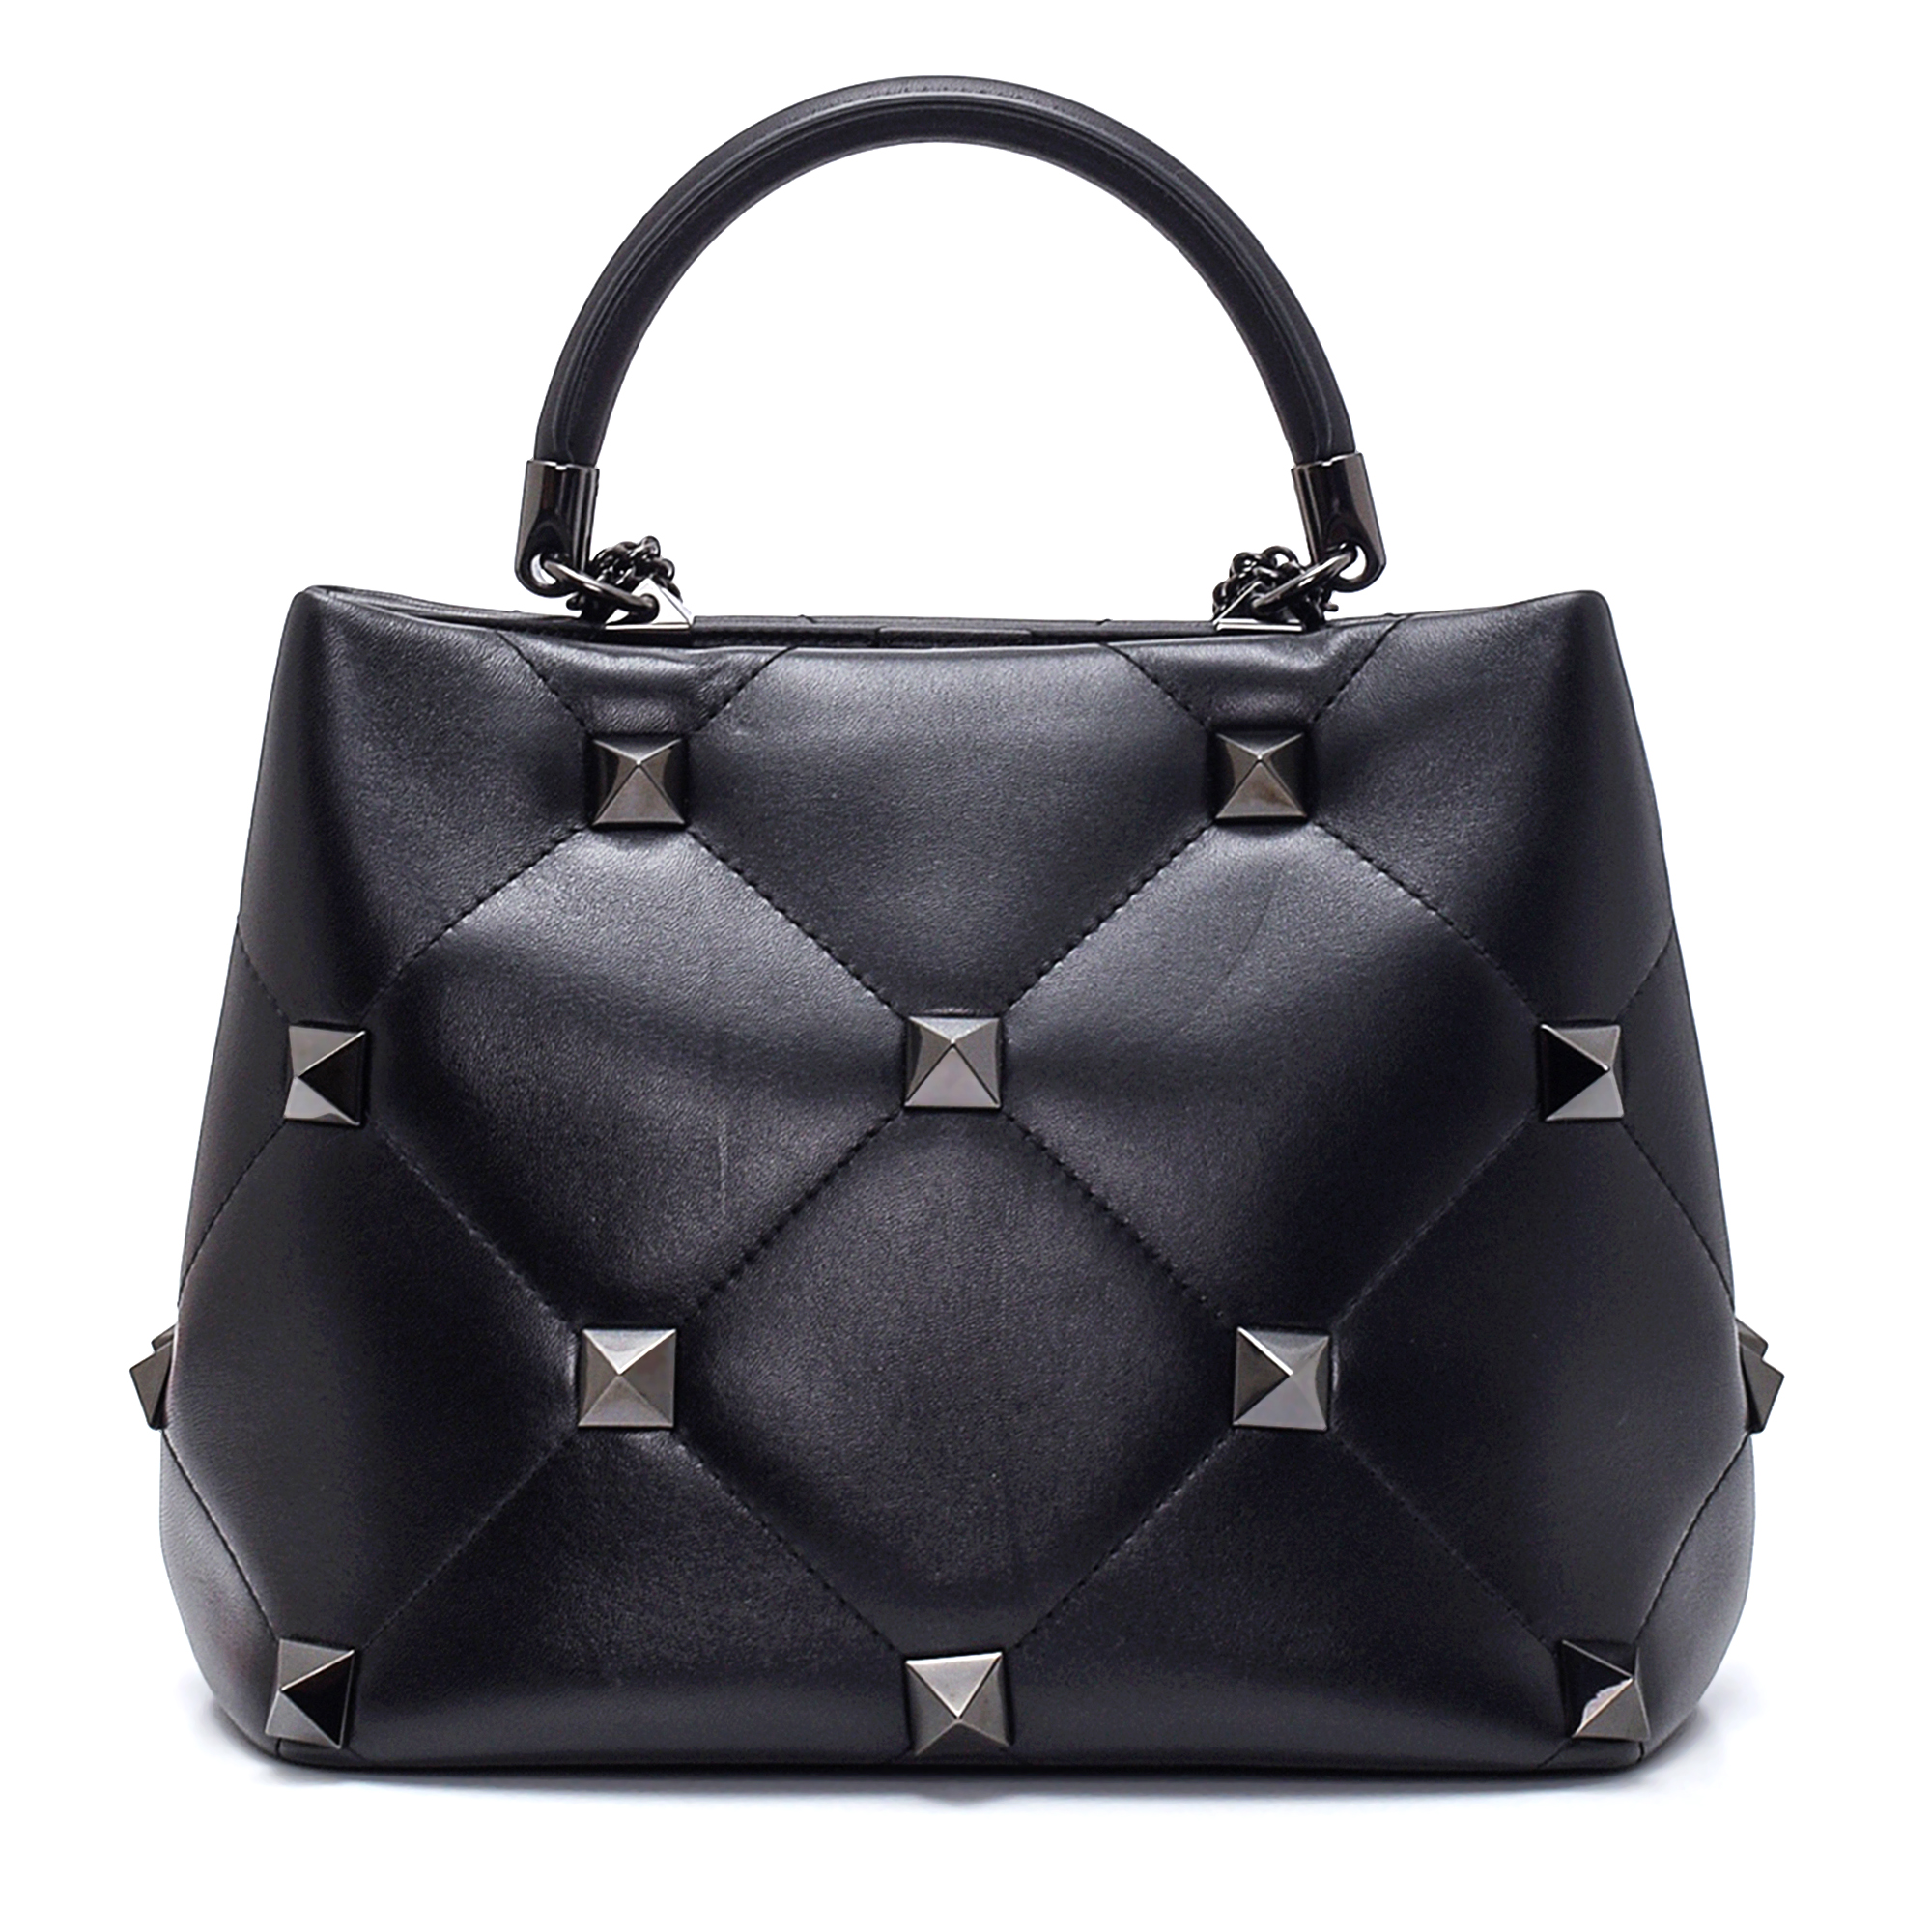 Valentino - Black Lambskin Leather Quilted Medium Stud Roman Bag